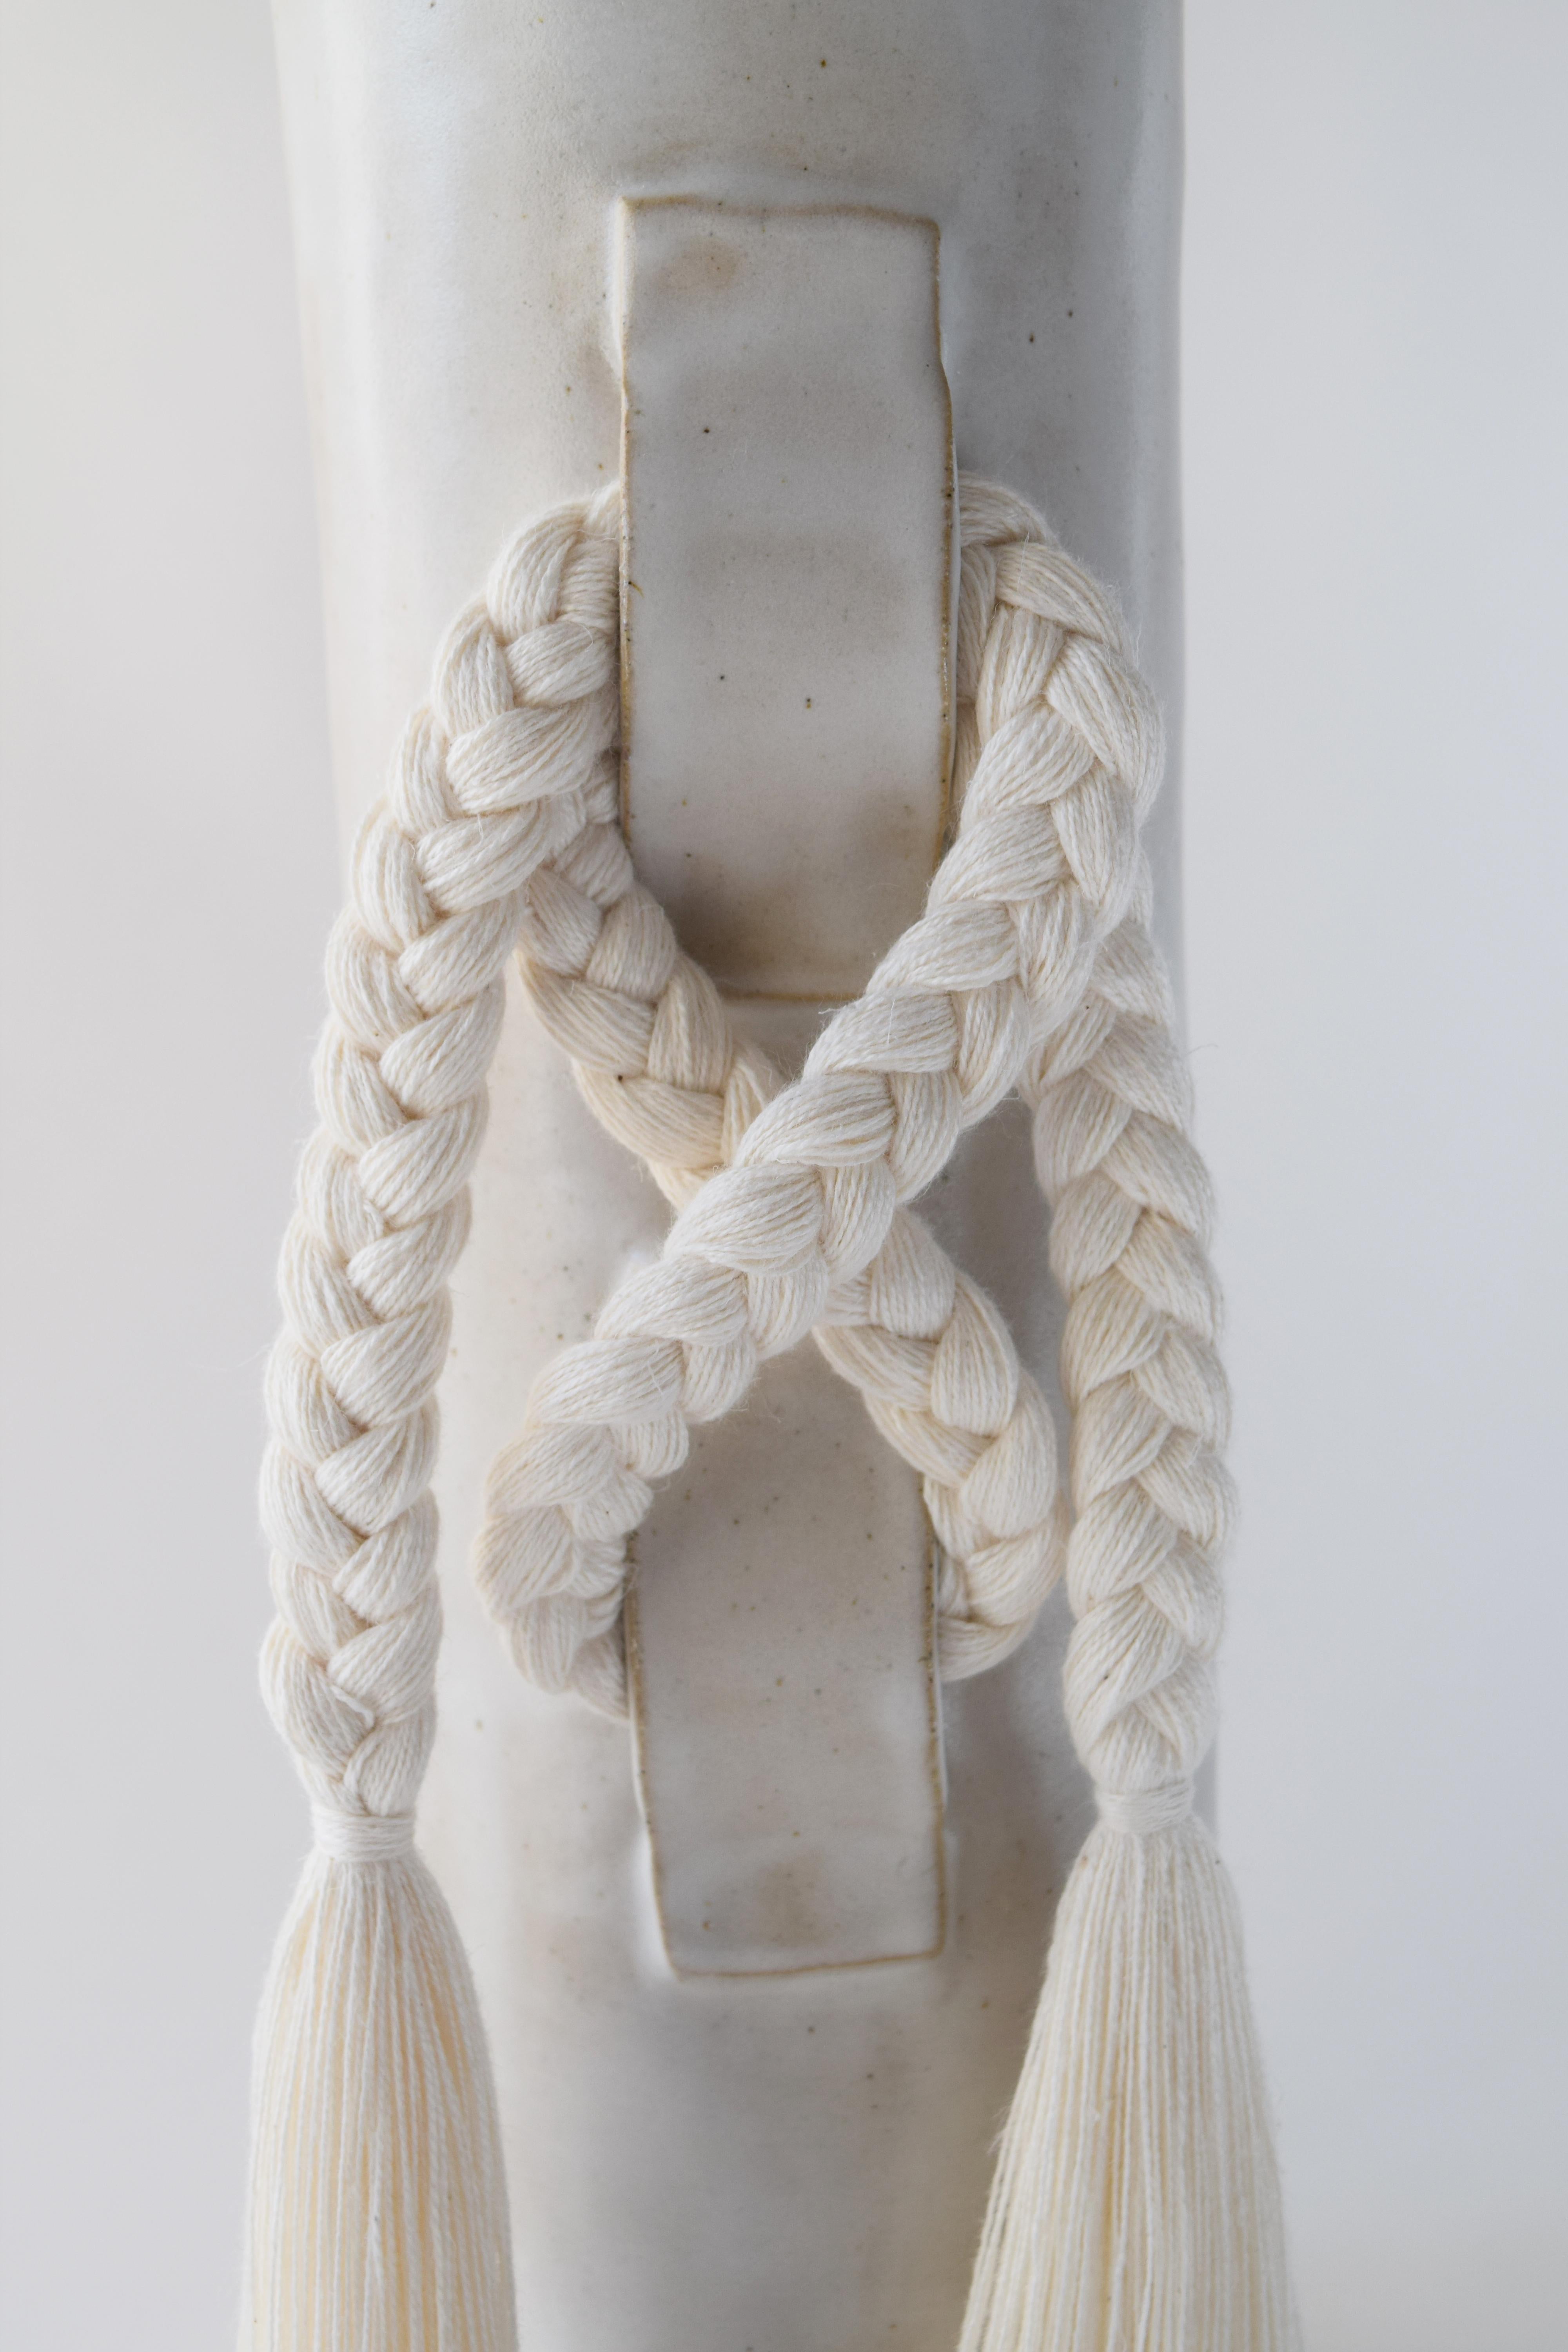 Organic Modern Handmade Ceramic Vase #696 in Satin White with White Cotton Braid and Fringe For Sale